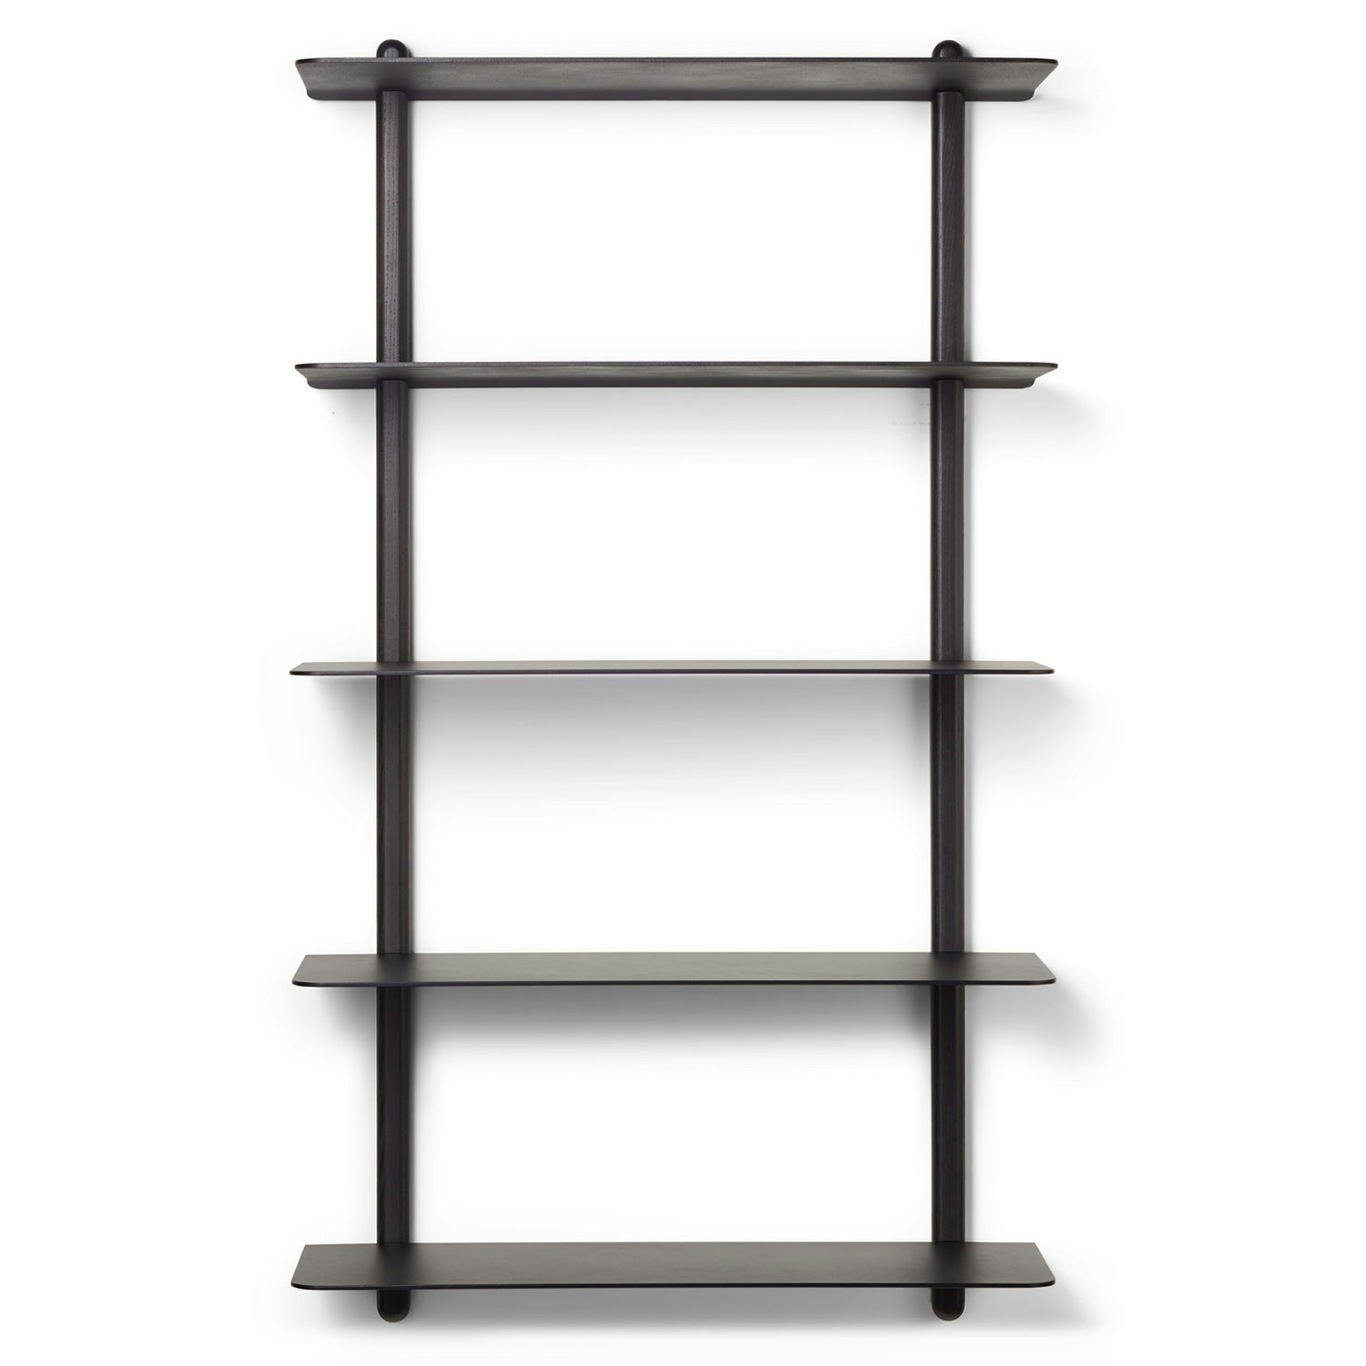 https://royaldesign.com/image/11/gejst-nivo-wall-shelf-large-e-1?w=800&quality=80